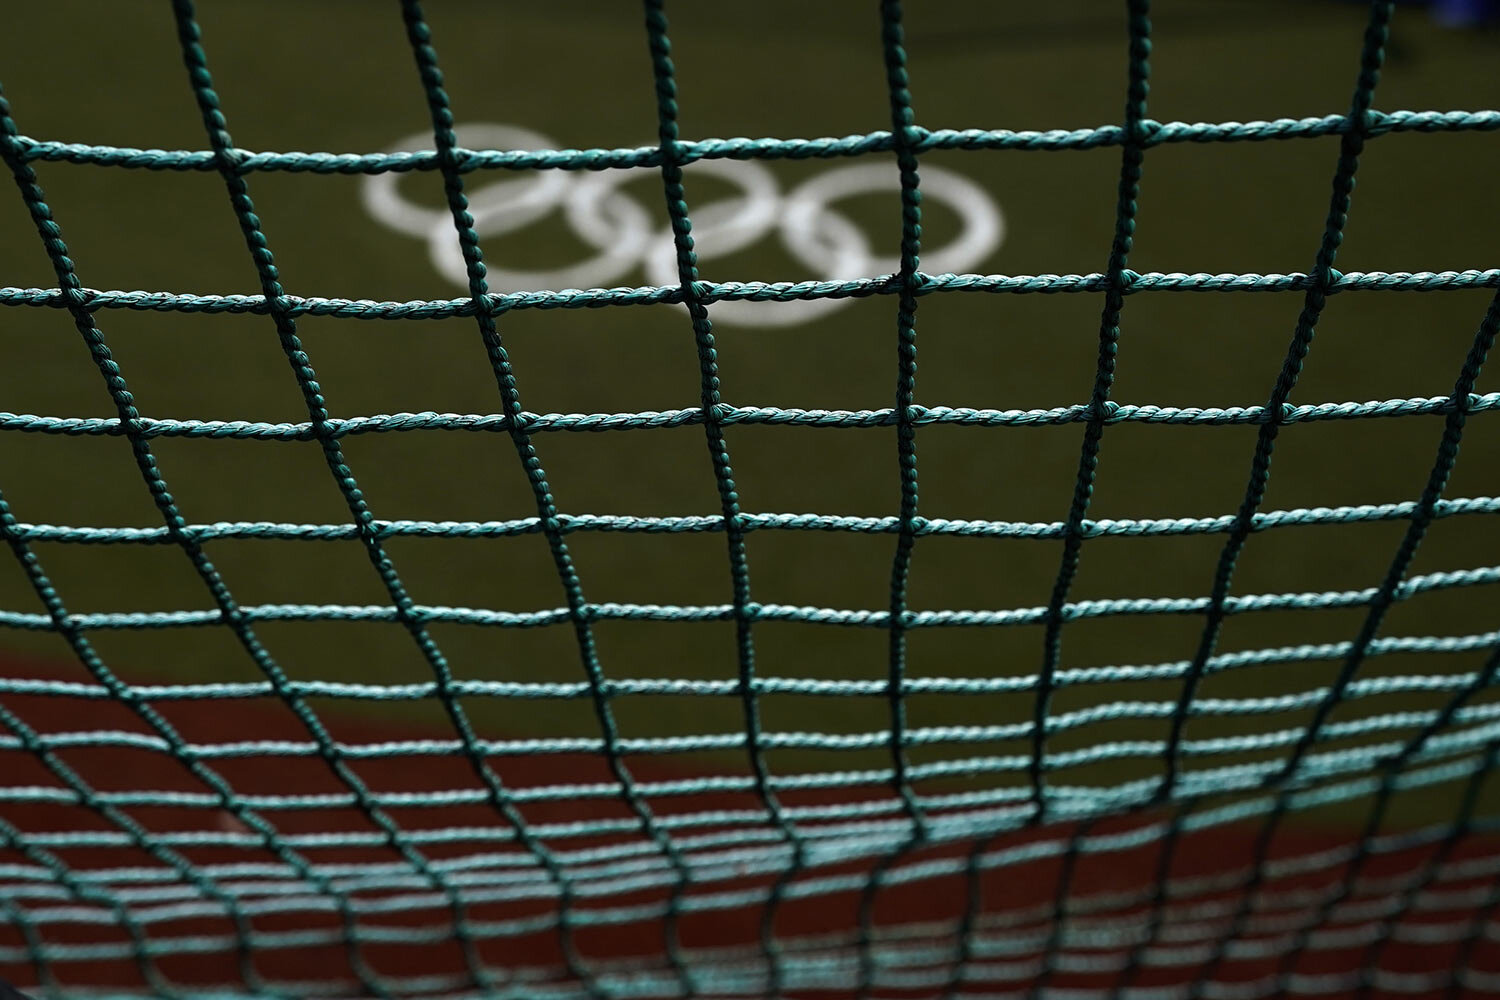  The Olympic rings painted on the field are seen through a net as U.S. softball players take batting practice at the Fukushima Azuma Baseball Stadium ahead of the 2020 Summer Olympics, Tuesday, July 20, 2021, in Fukushima, Japan. (AP Photo/Jae C. Hon